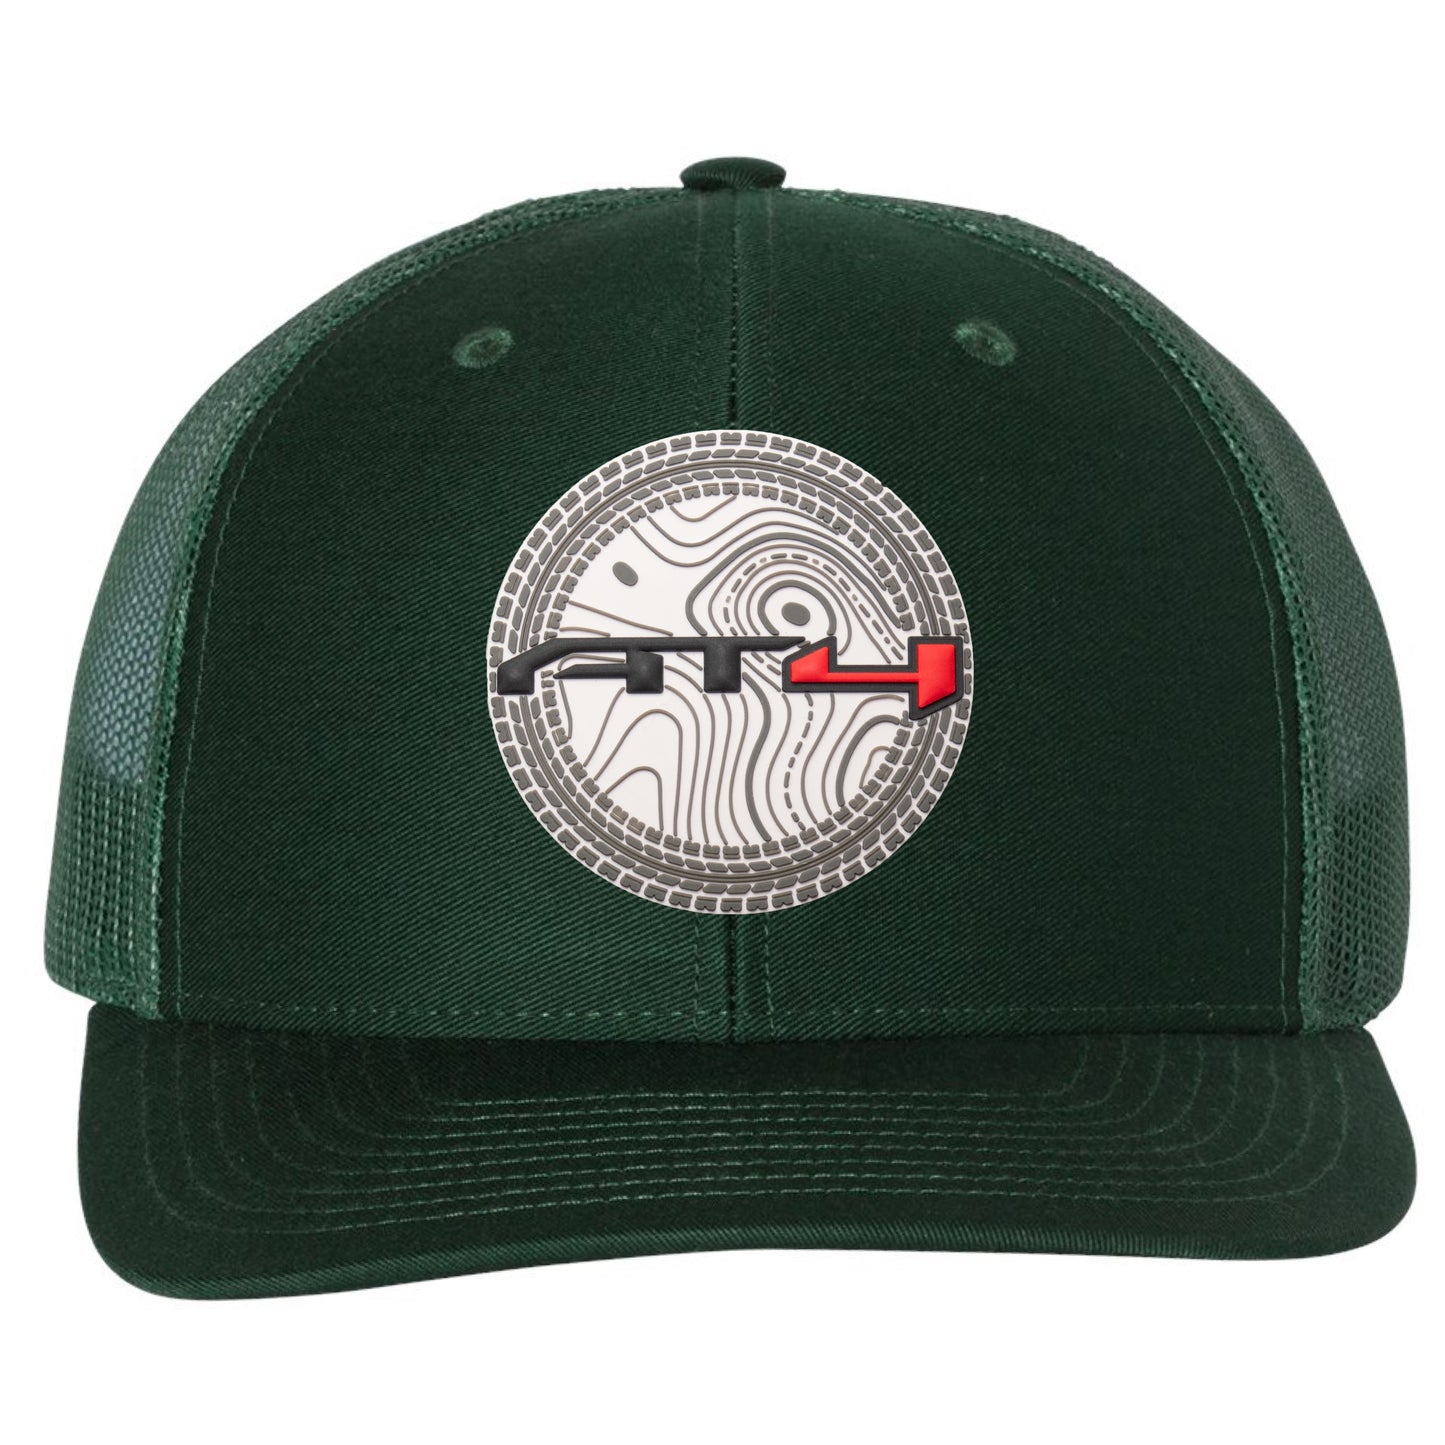 AT4 3D PVC Patch Snapback Trucker Hat- Dark Green - Ten Gallon Hat Co.